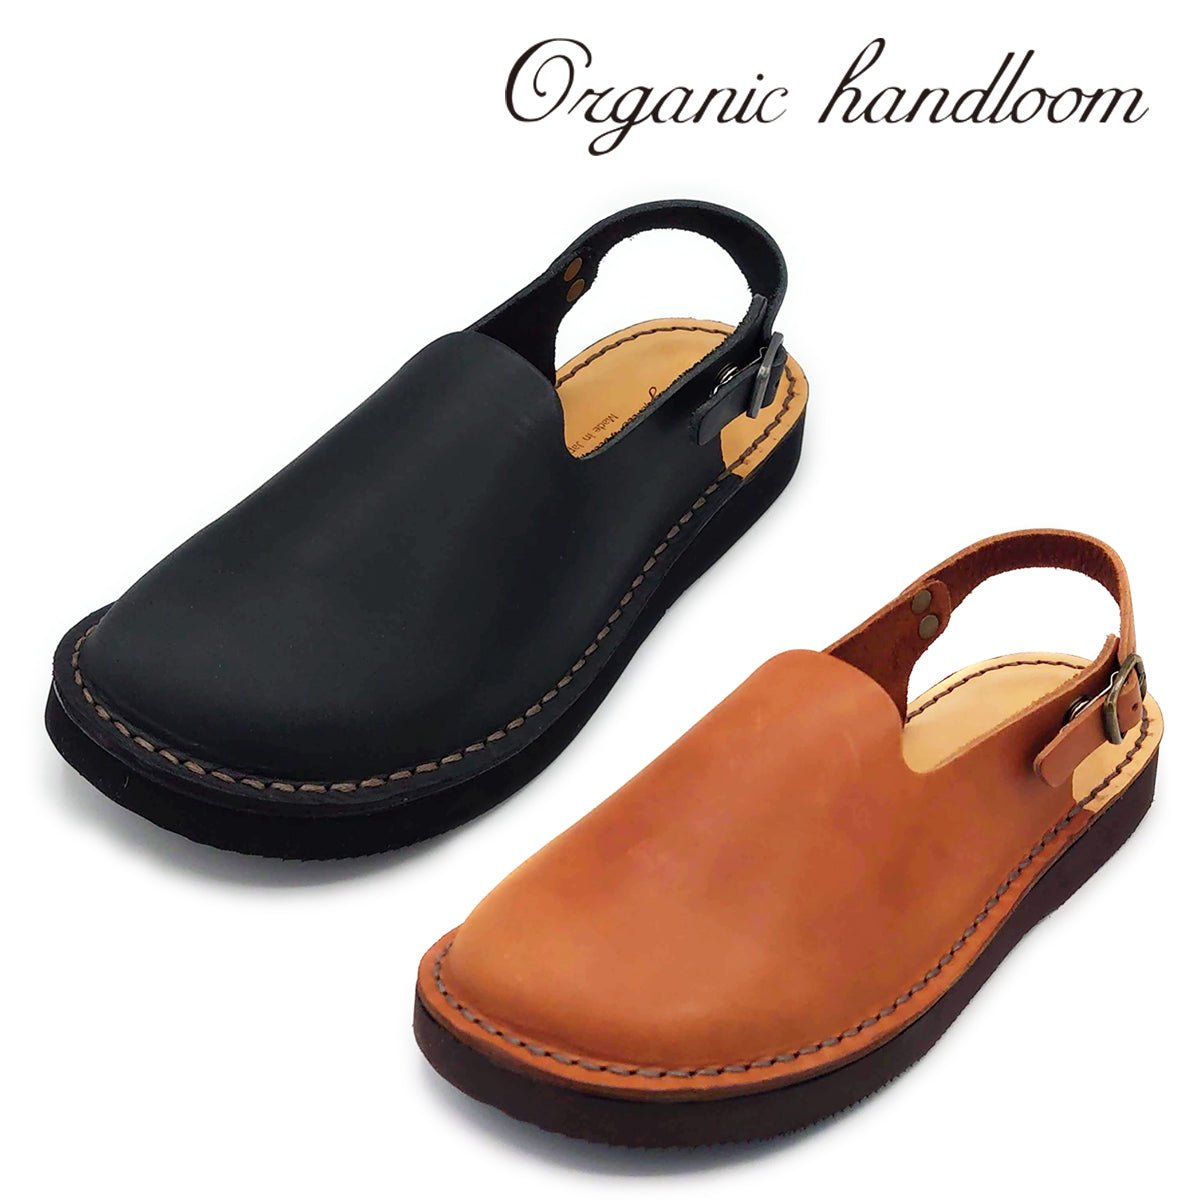 Organic handloom ユニセックス サンダル MEISSEN OH007 - Organic handloom (オーガニックハンドルーム) - 202シューズモリ オンラインショップ